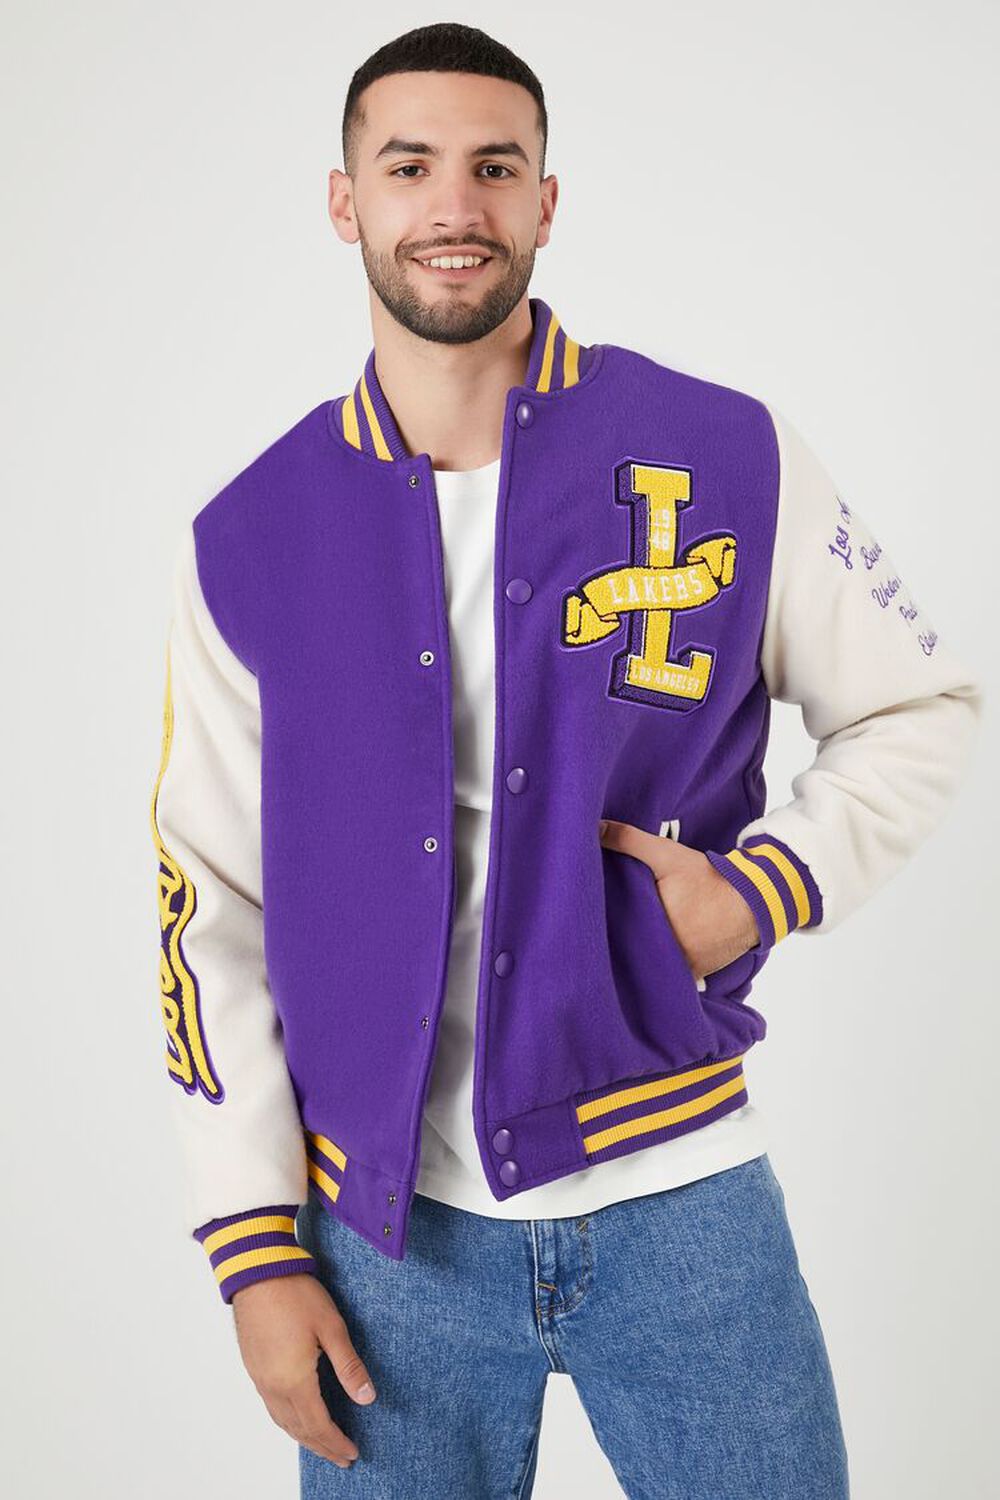 Los Angeles Lakers Purple Embroidered Jacket